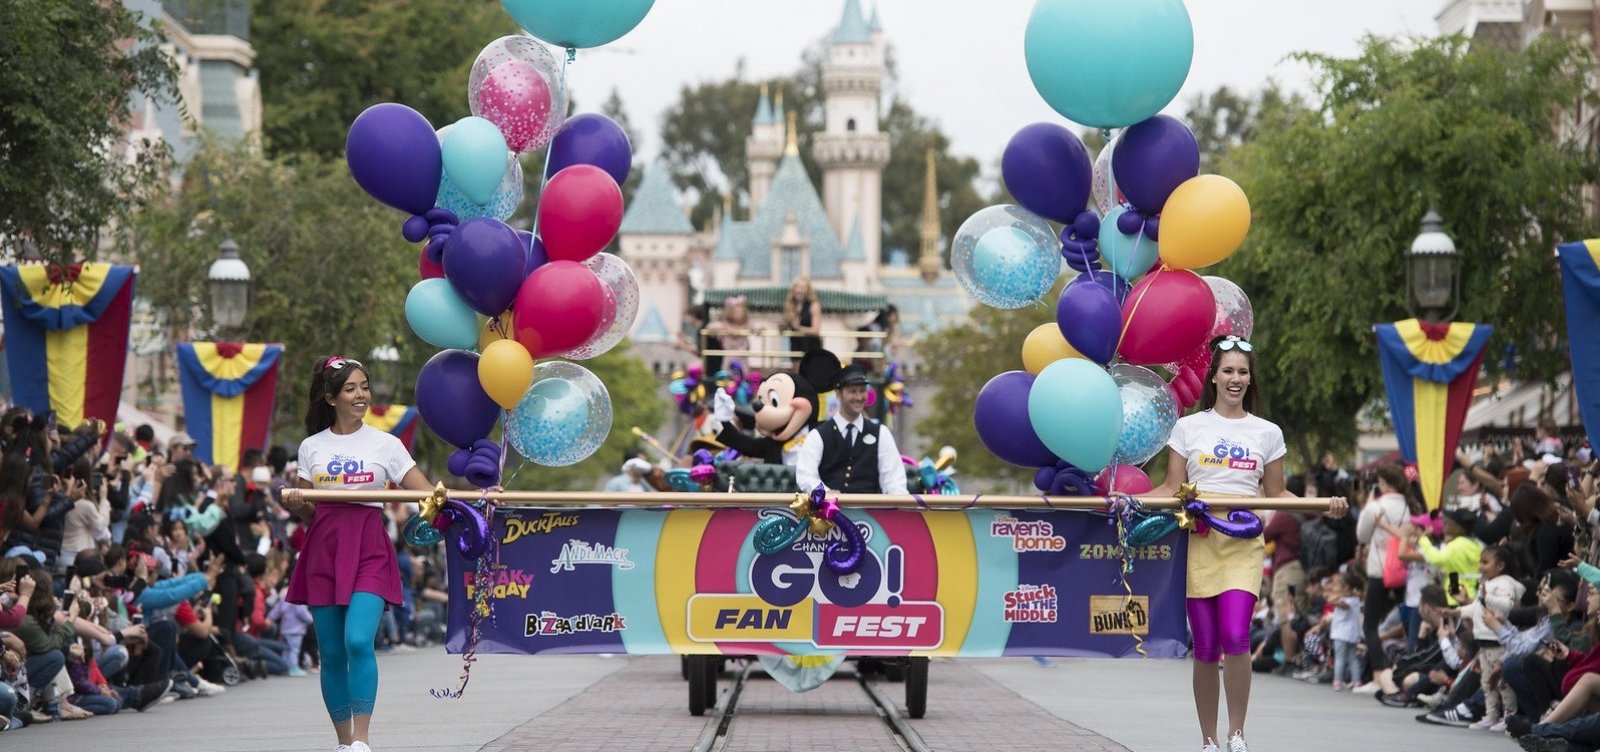 Disney decide adiar reabertura de parque após aumento de casos de coronavírus